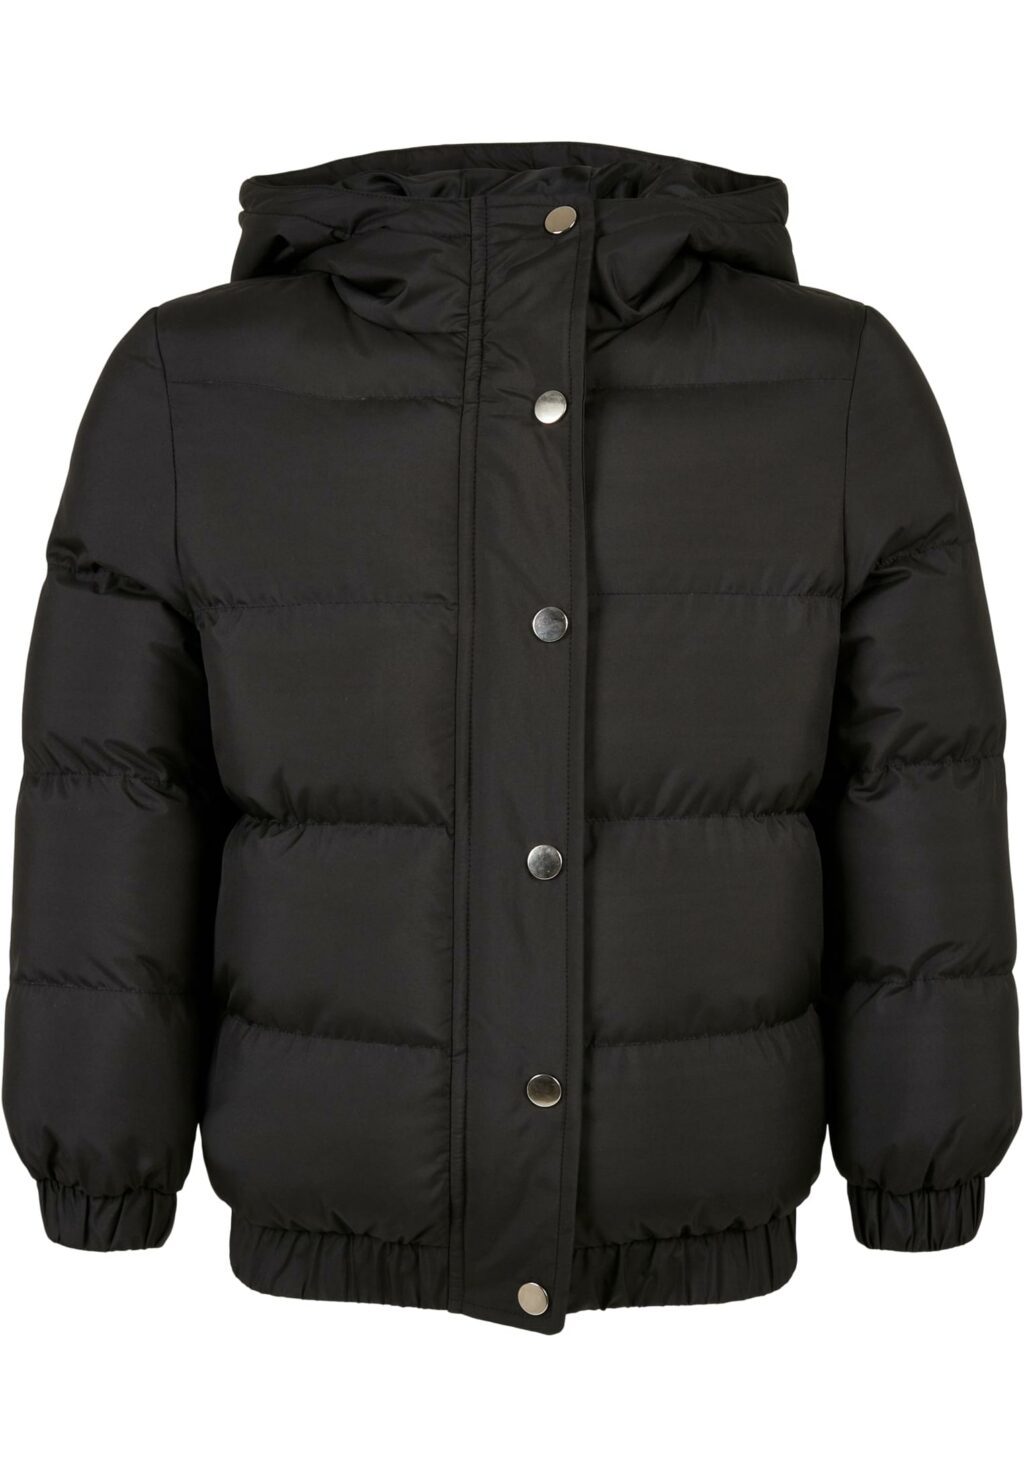 Girls Hooded Puffer Jacket black UCK1756